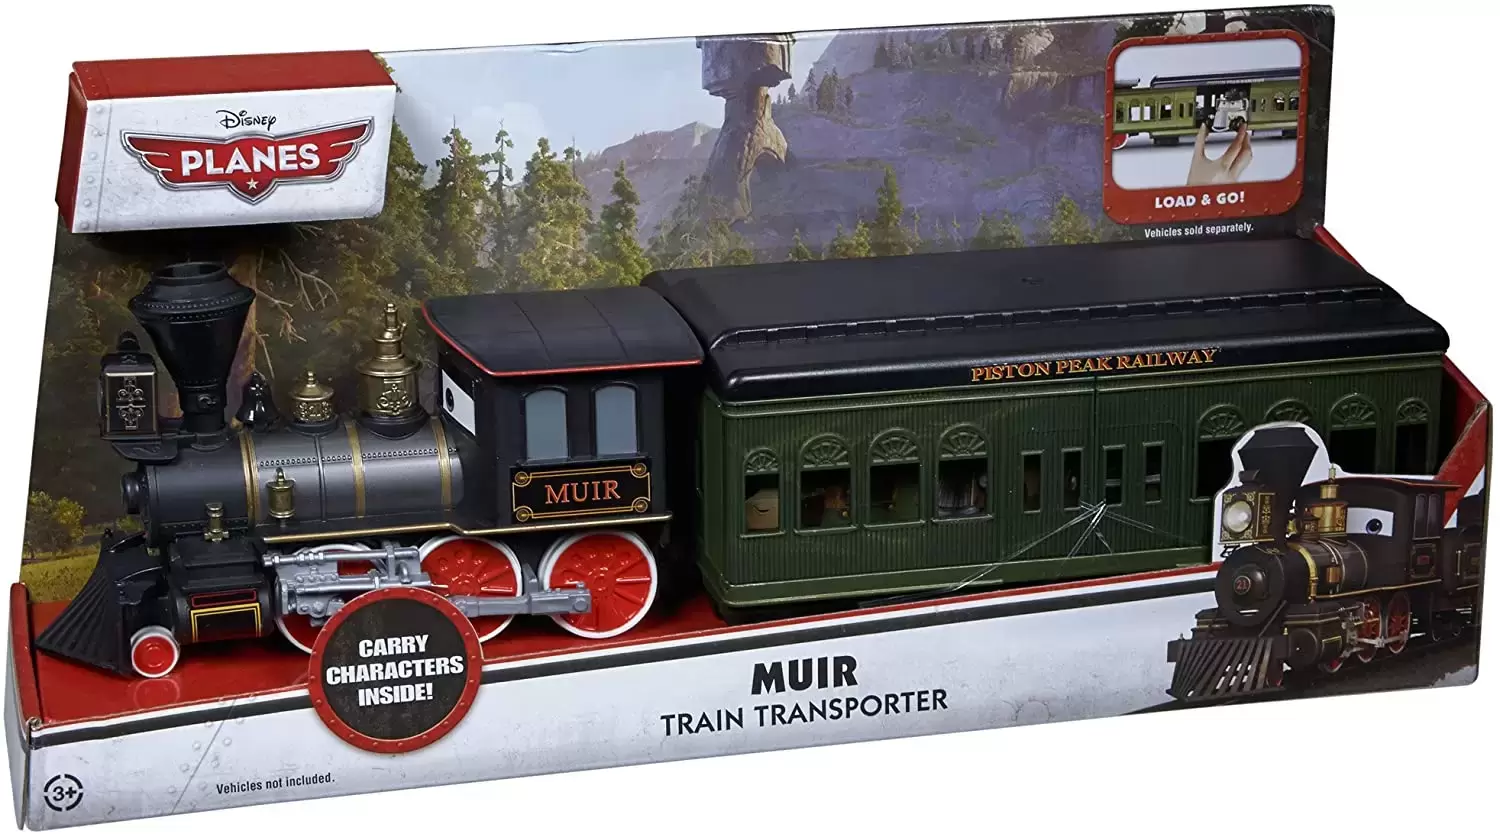 Planes - Muir - Train Transporter